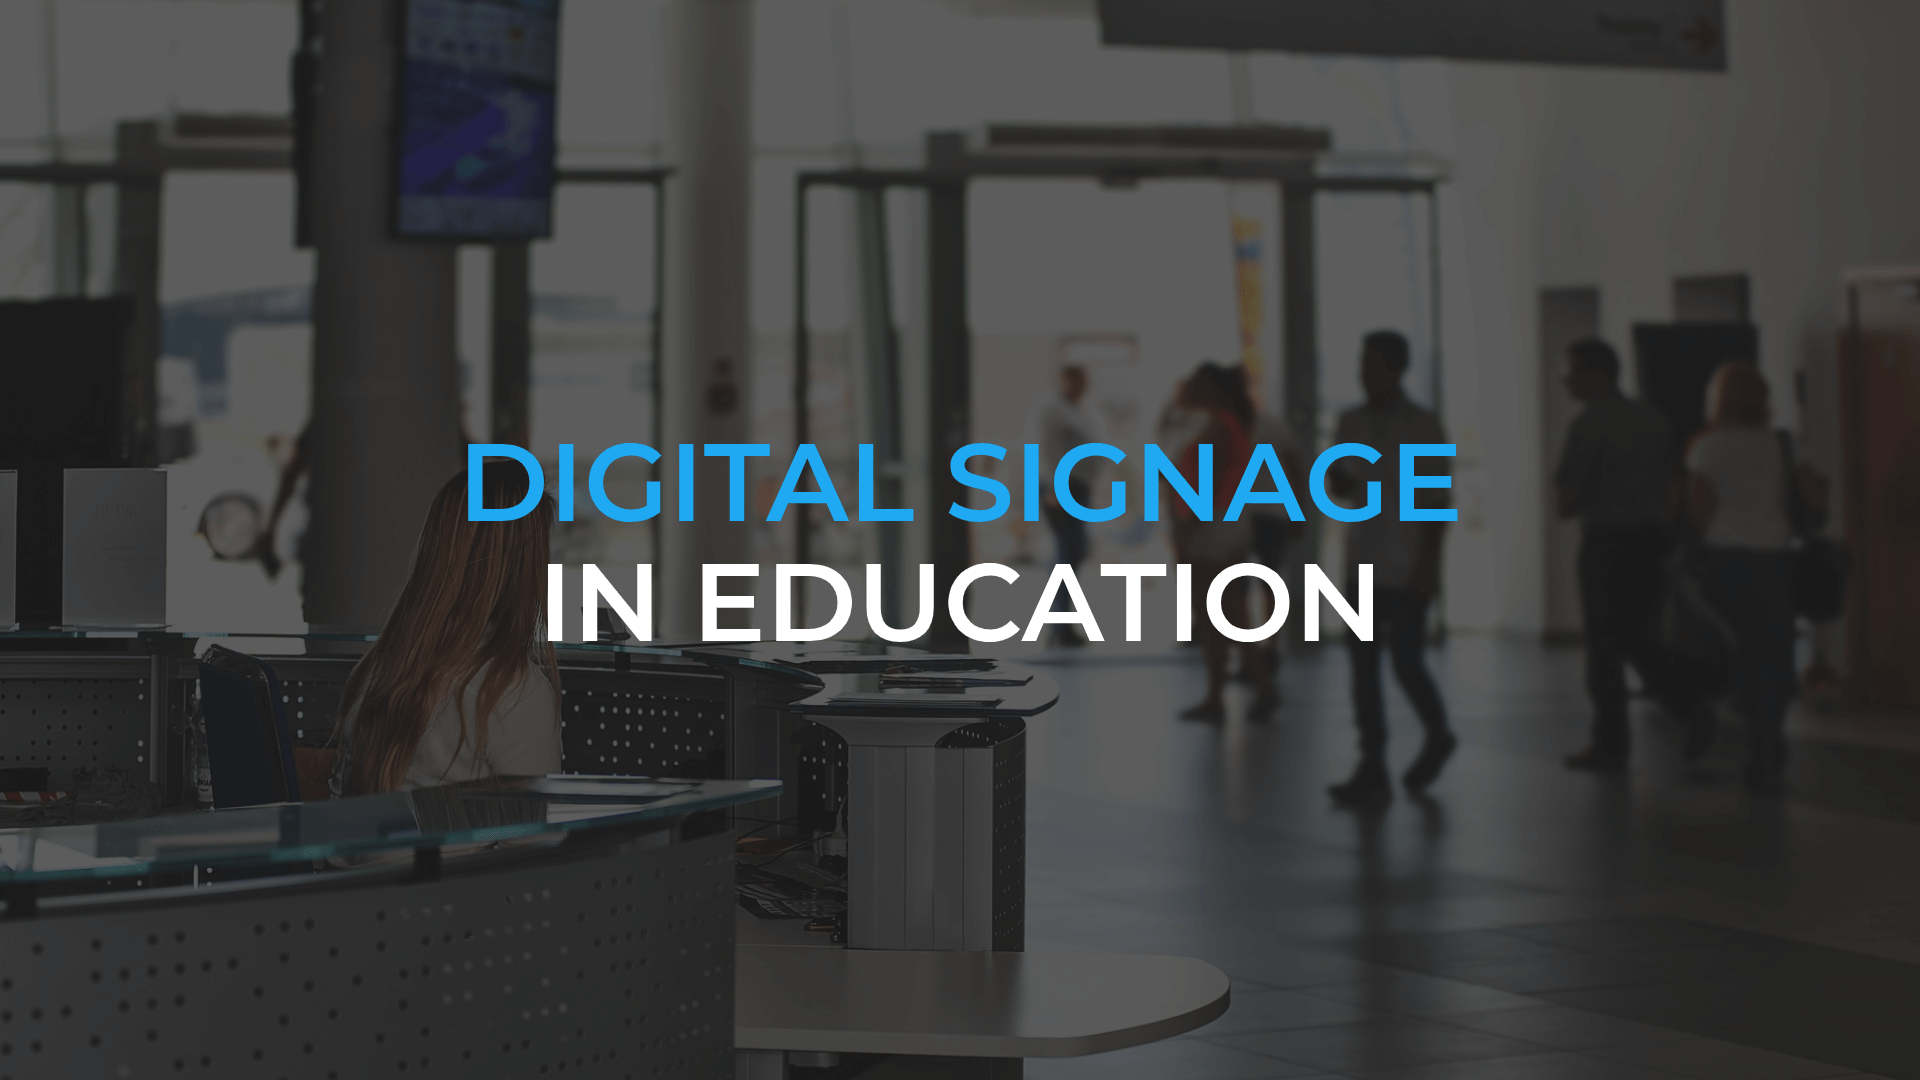 Digital signage in education